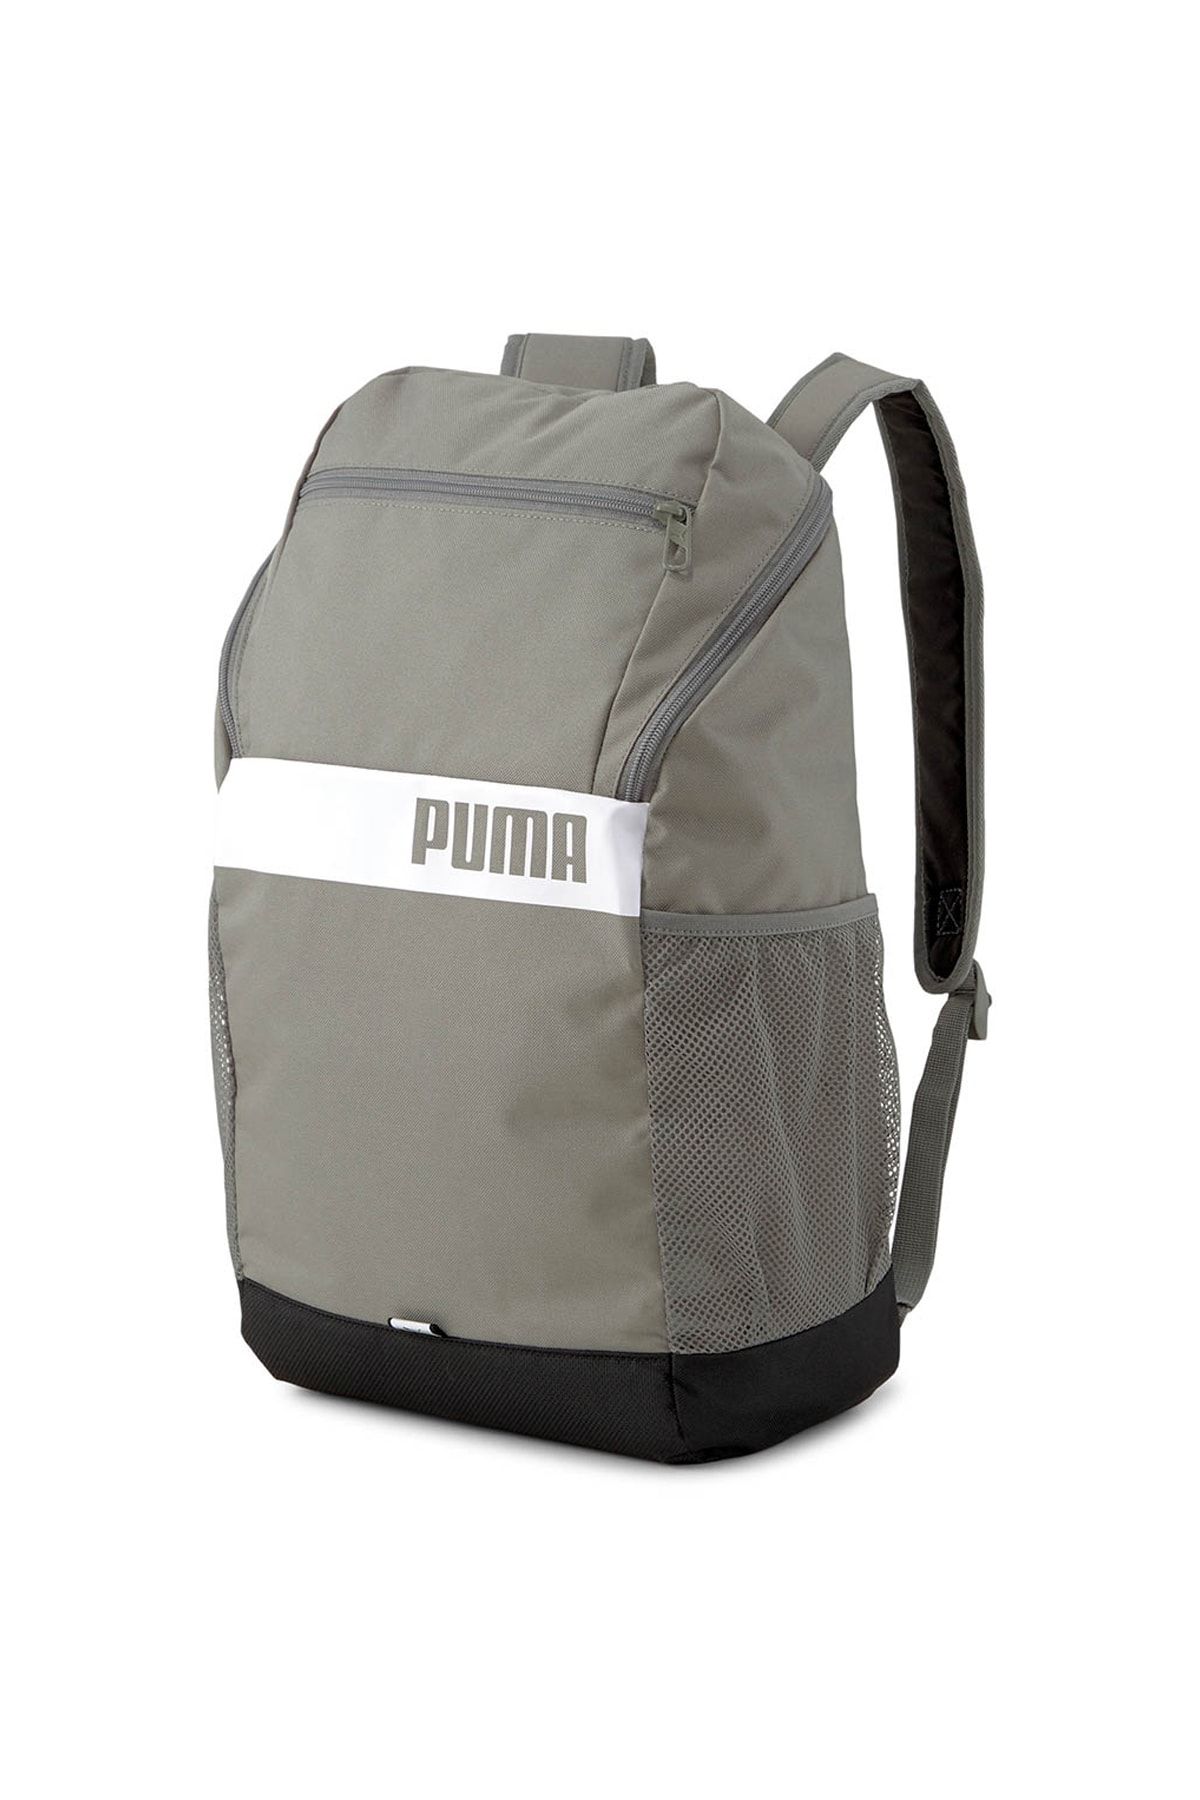 Puma Unisex Gri  Sırt Çantası - Plus Backpack - 07729204